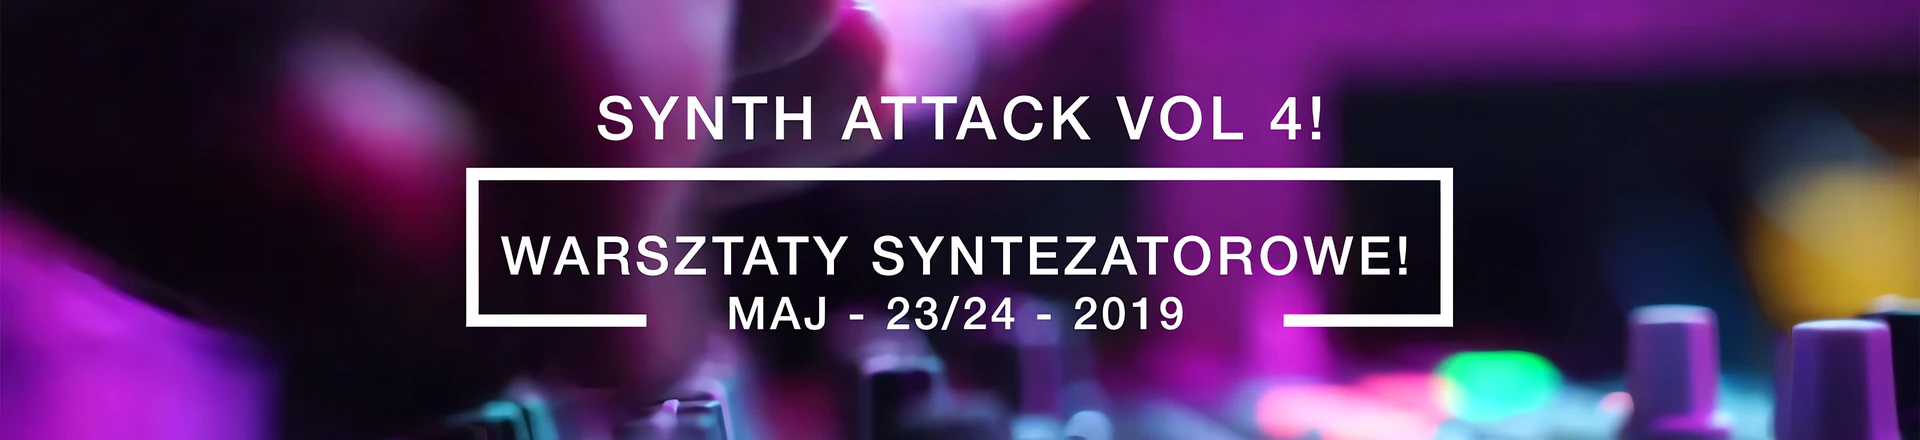 Synth Attack! Warsztaty produkcji muzyki i otwarte spotkanie instrumentami